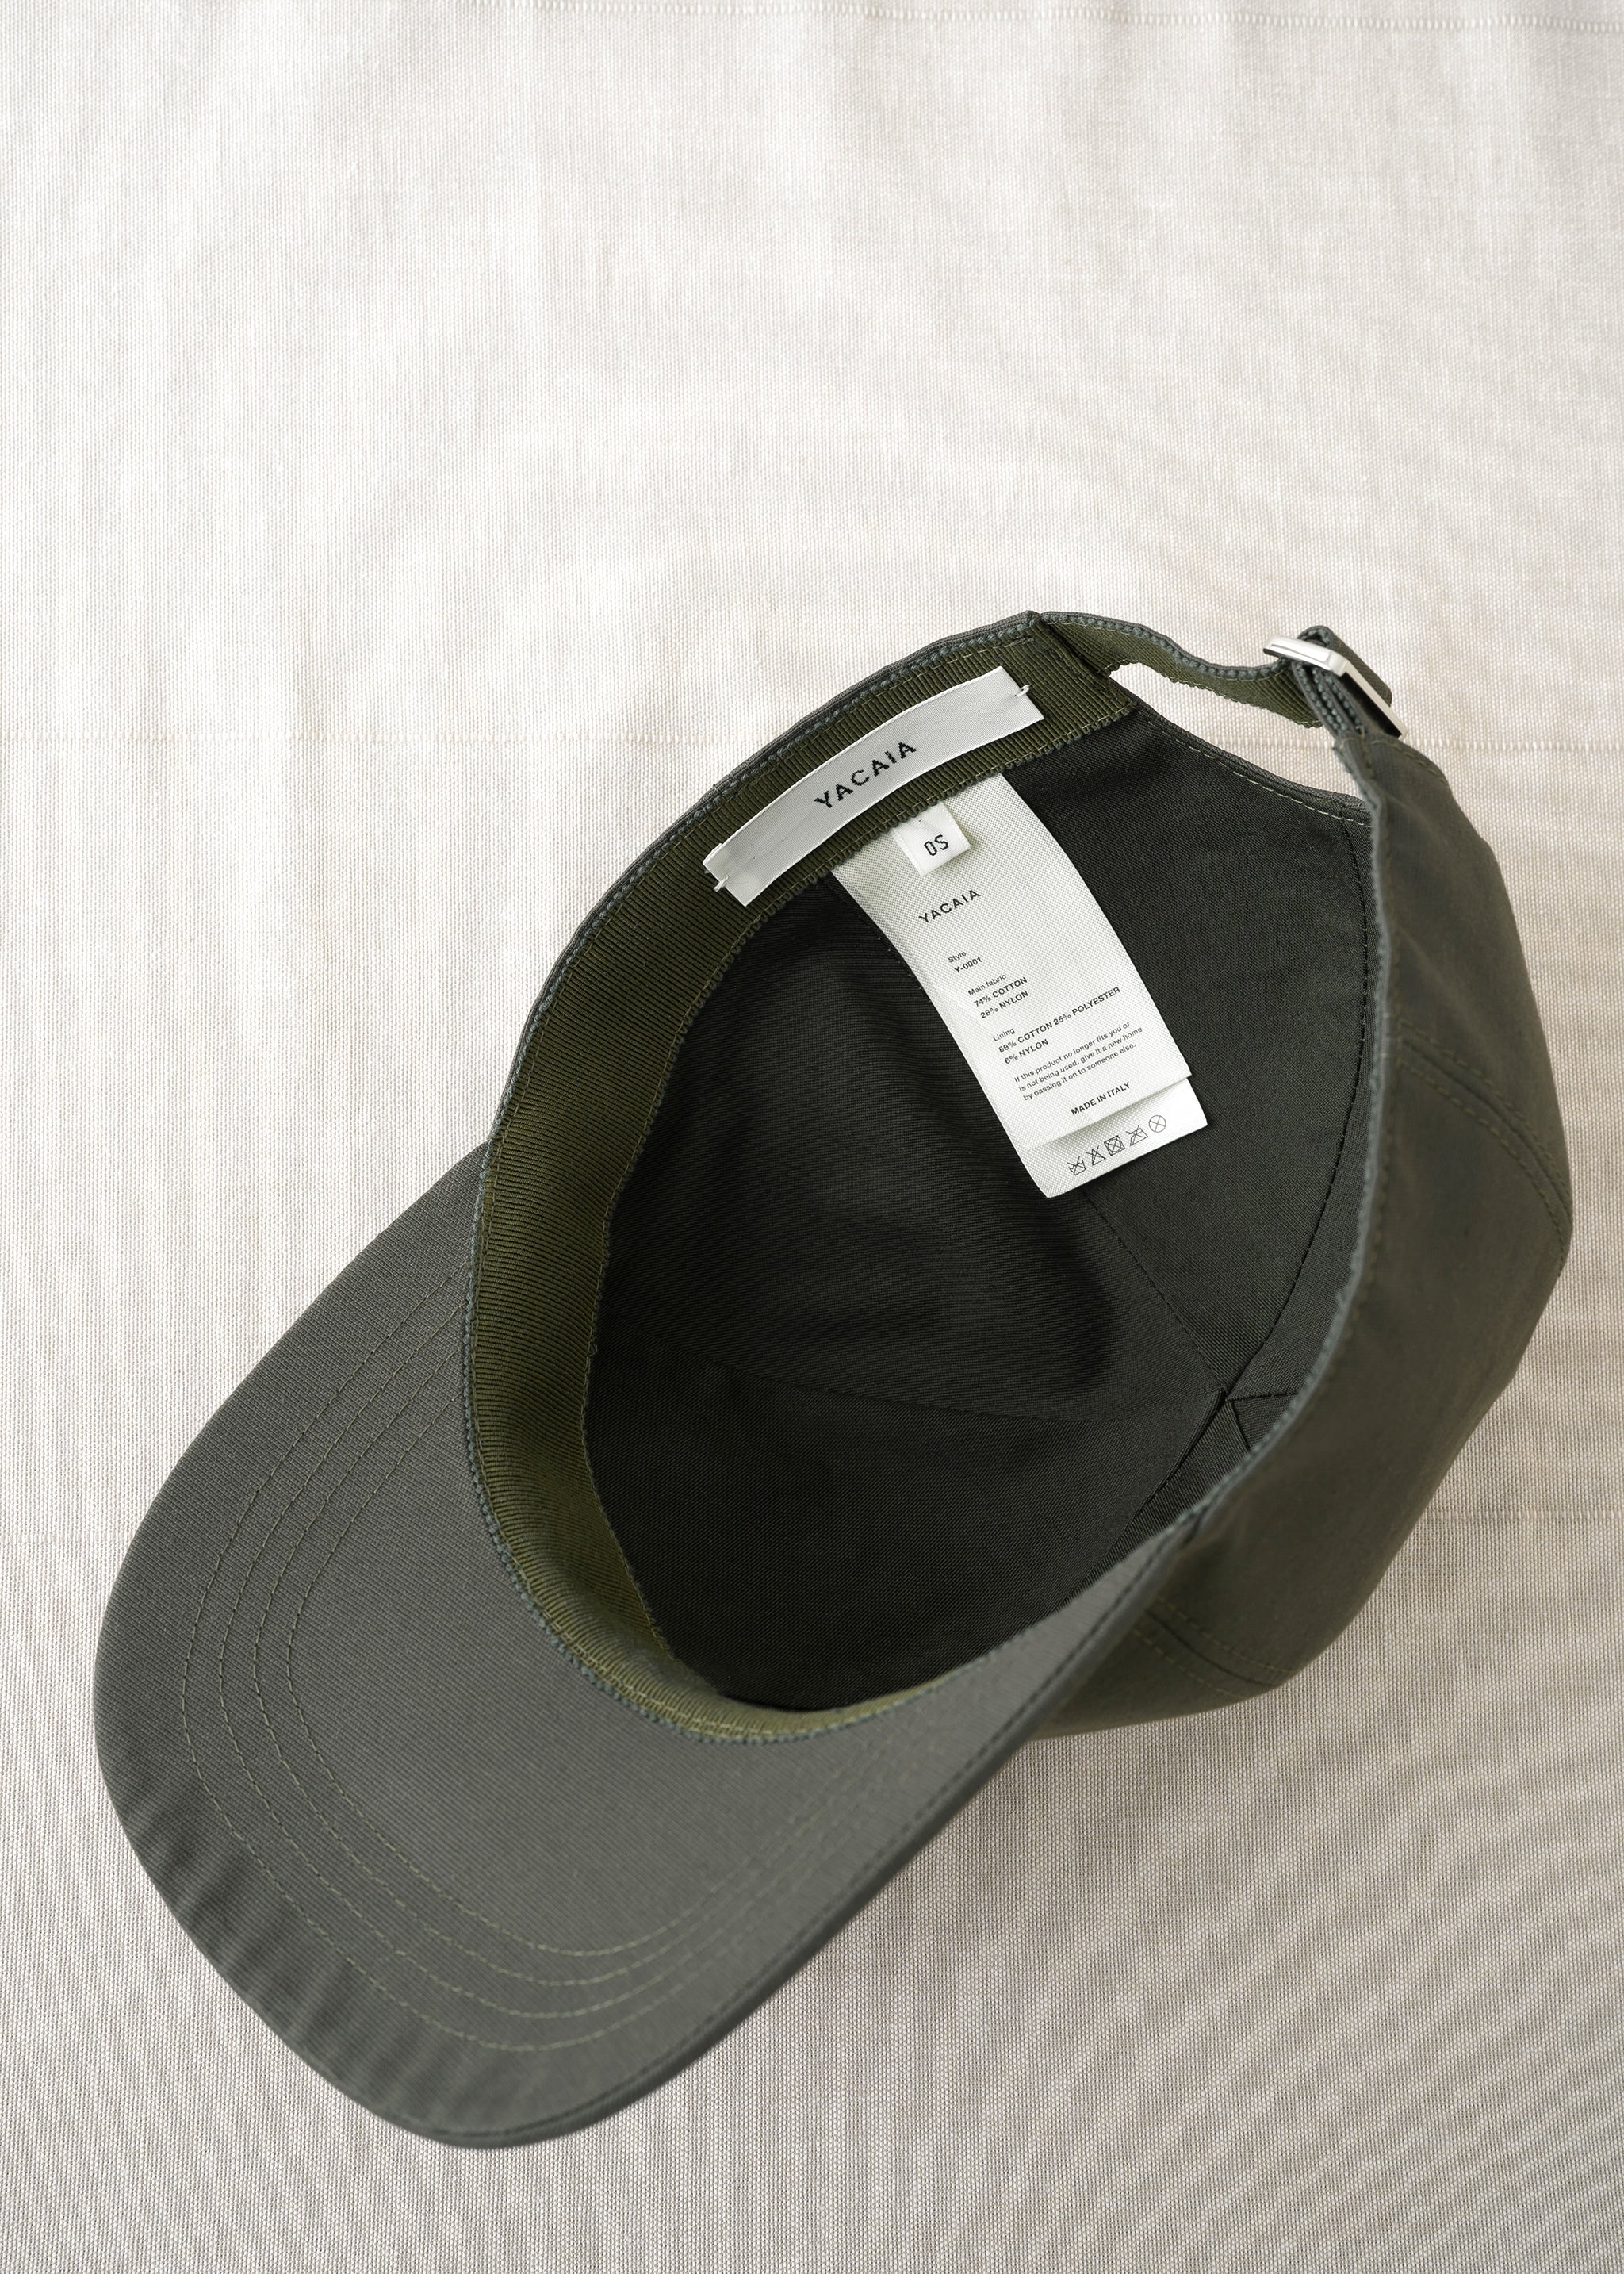 Y-0001 Baseball Cap - Olive (Cotton blend)